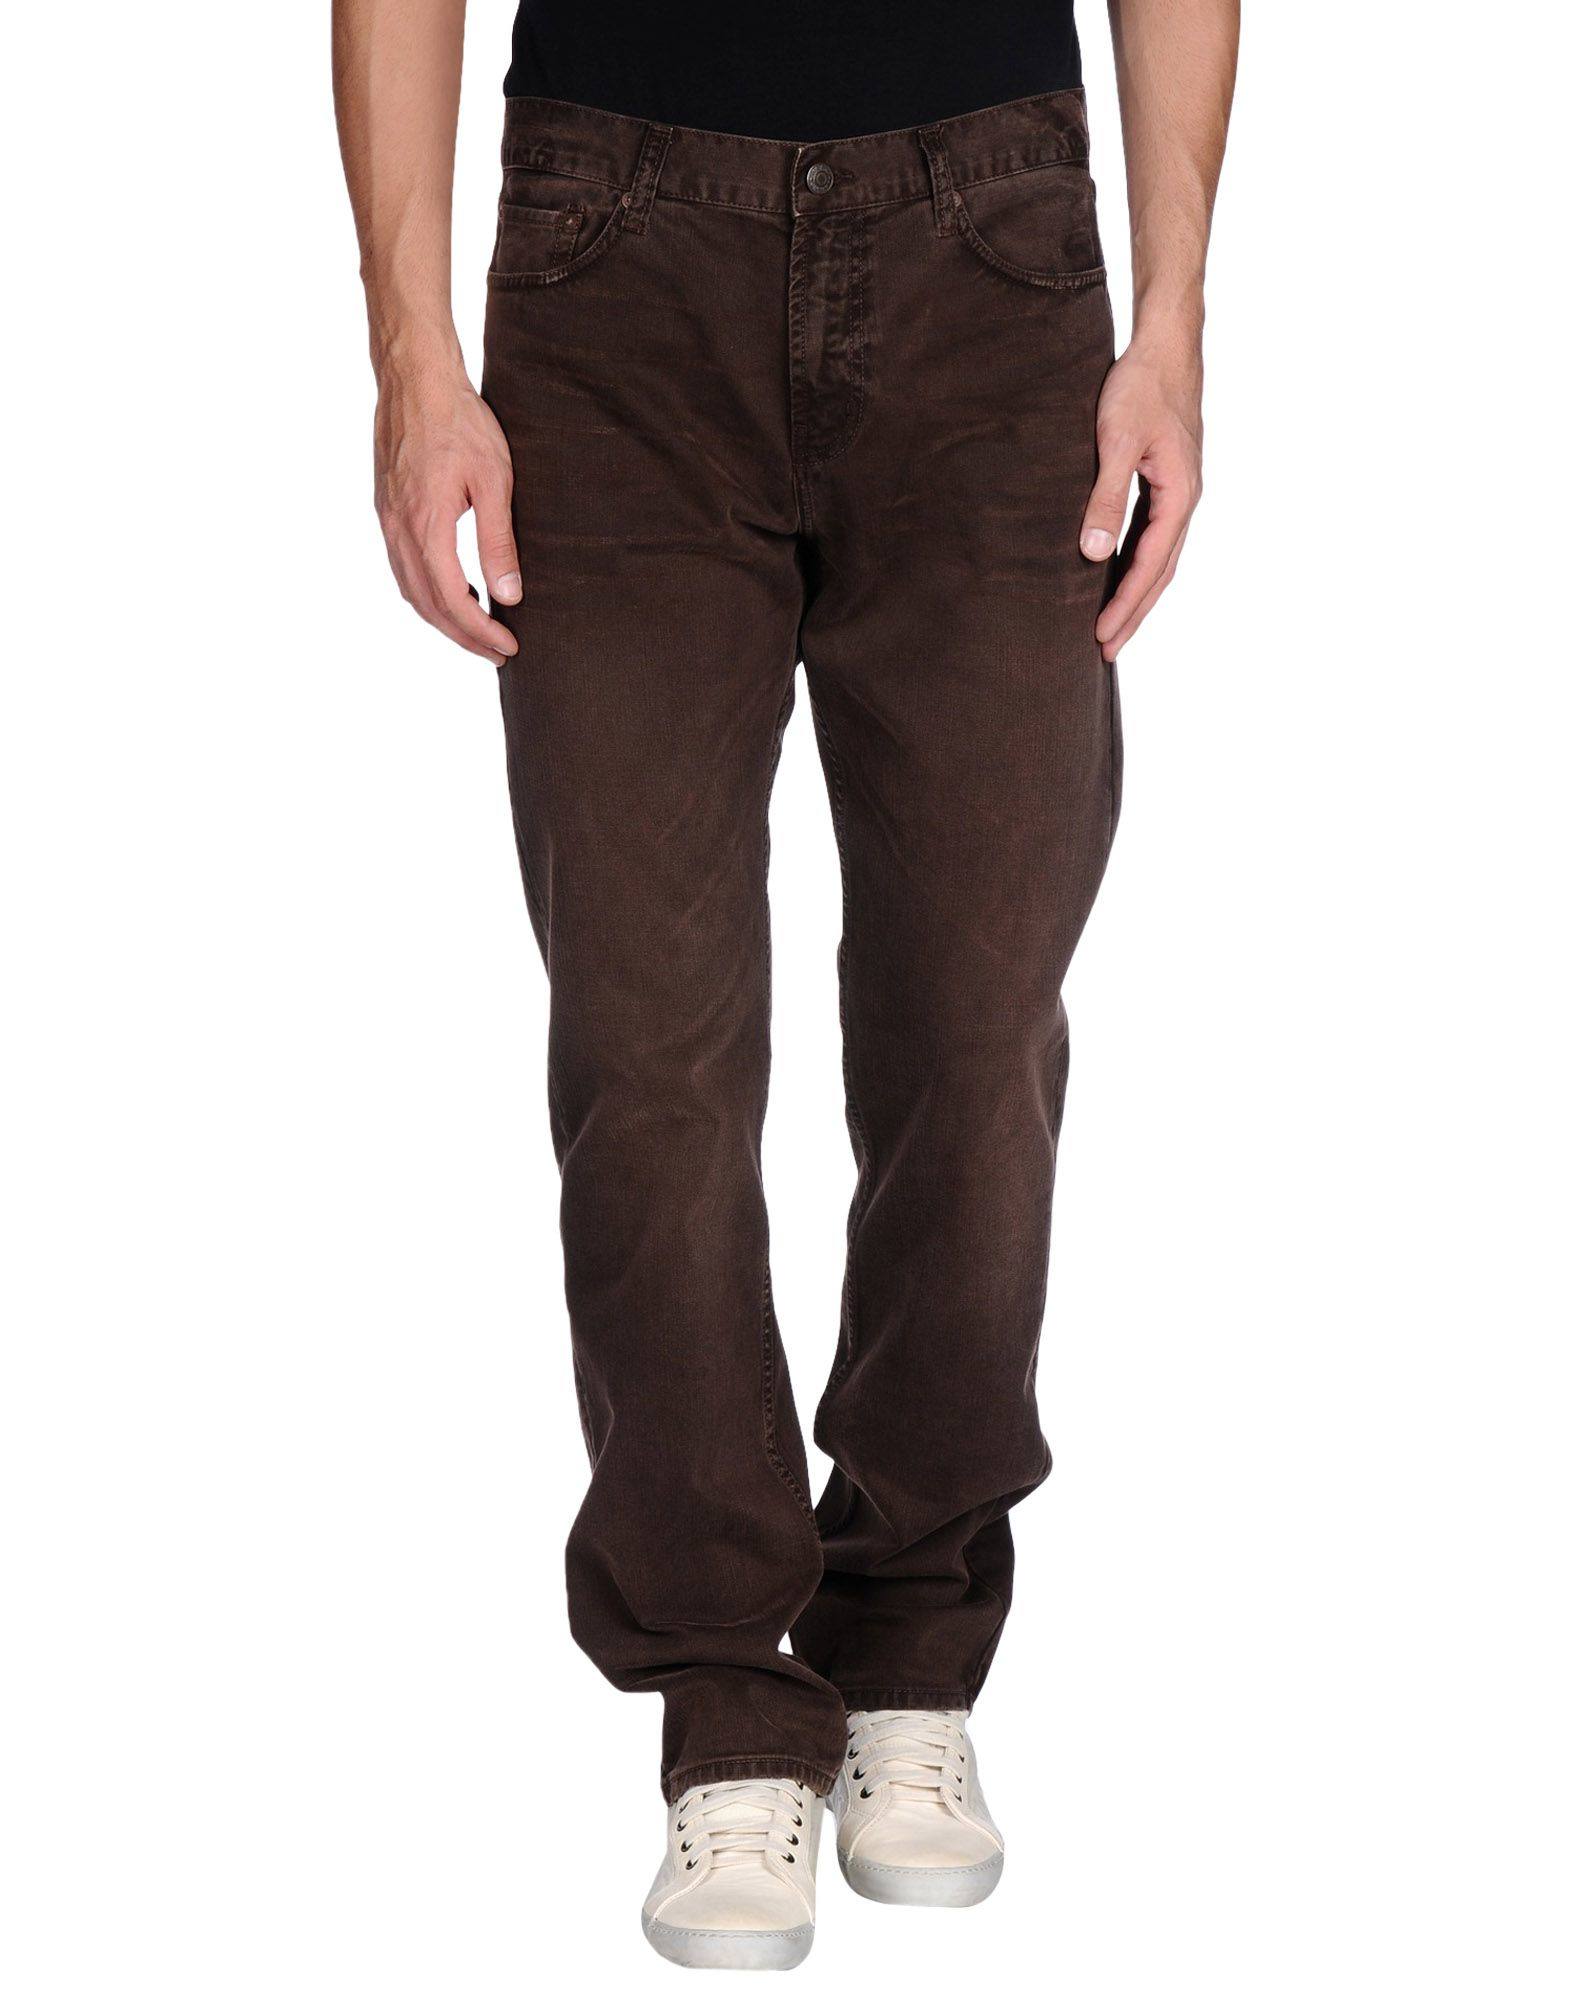 J Brand Denim Trousers in Dark Brown (Brown) for Men - Lyst